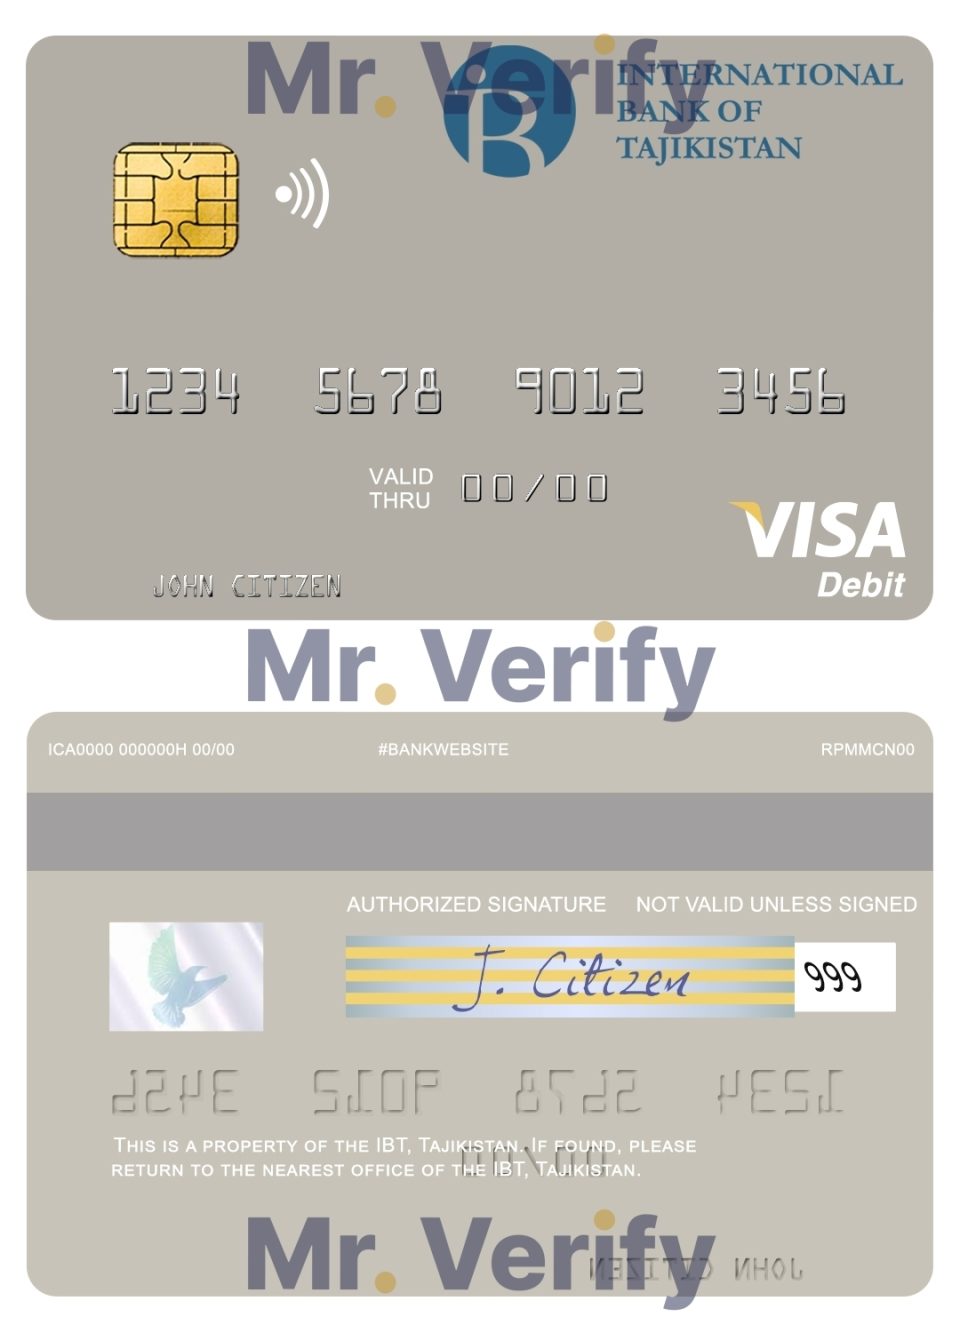 Editable Tajikistan IBT Bank visa debit card Templates in PSD Format